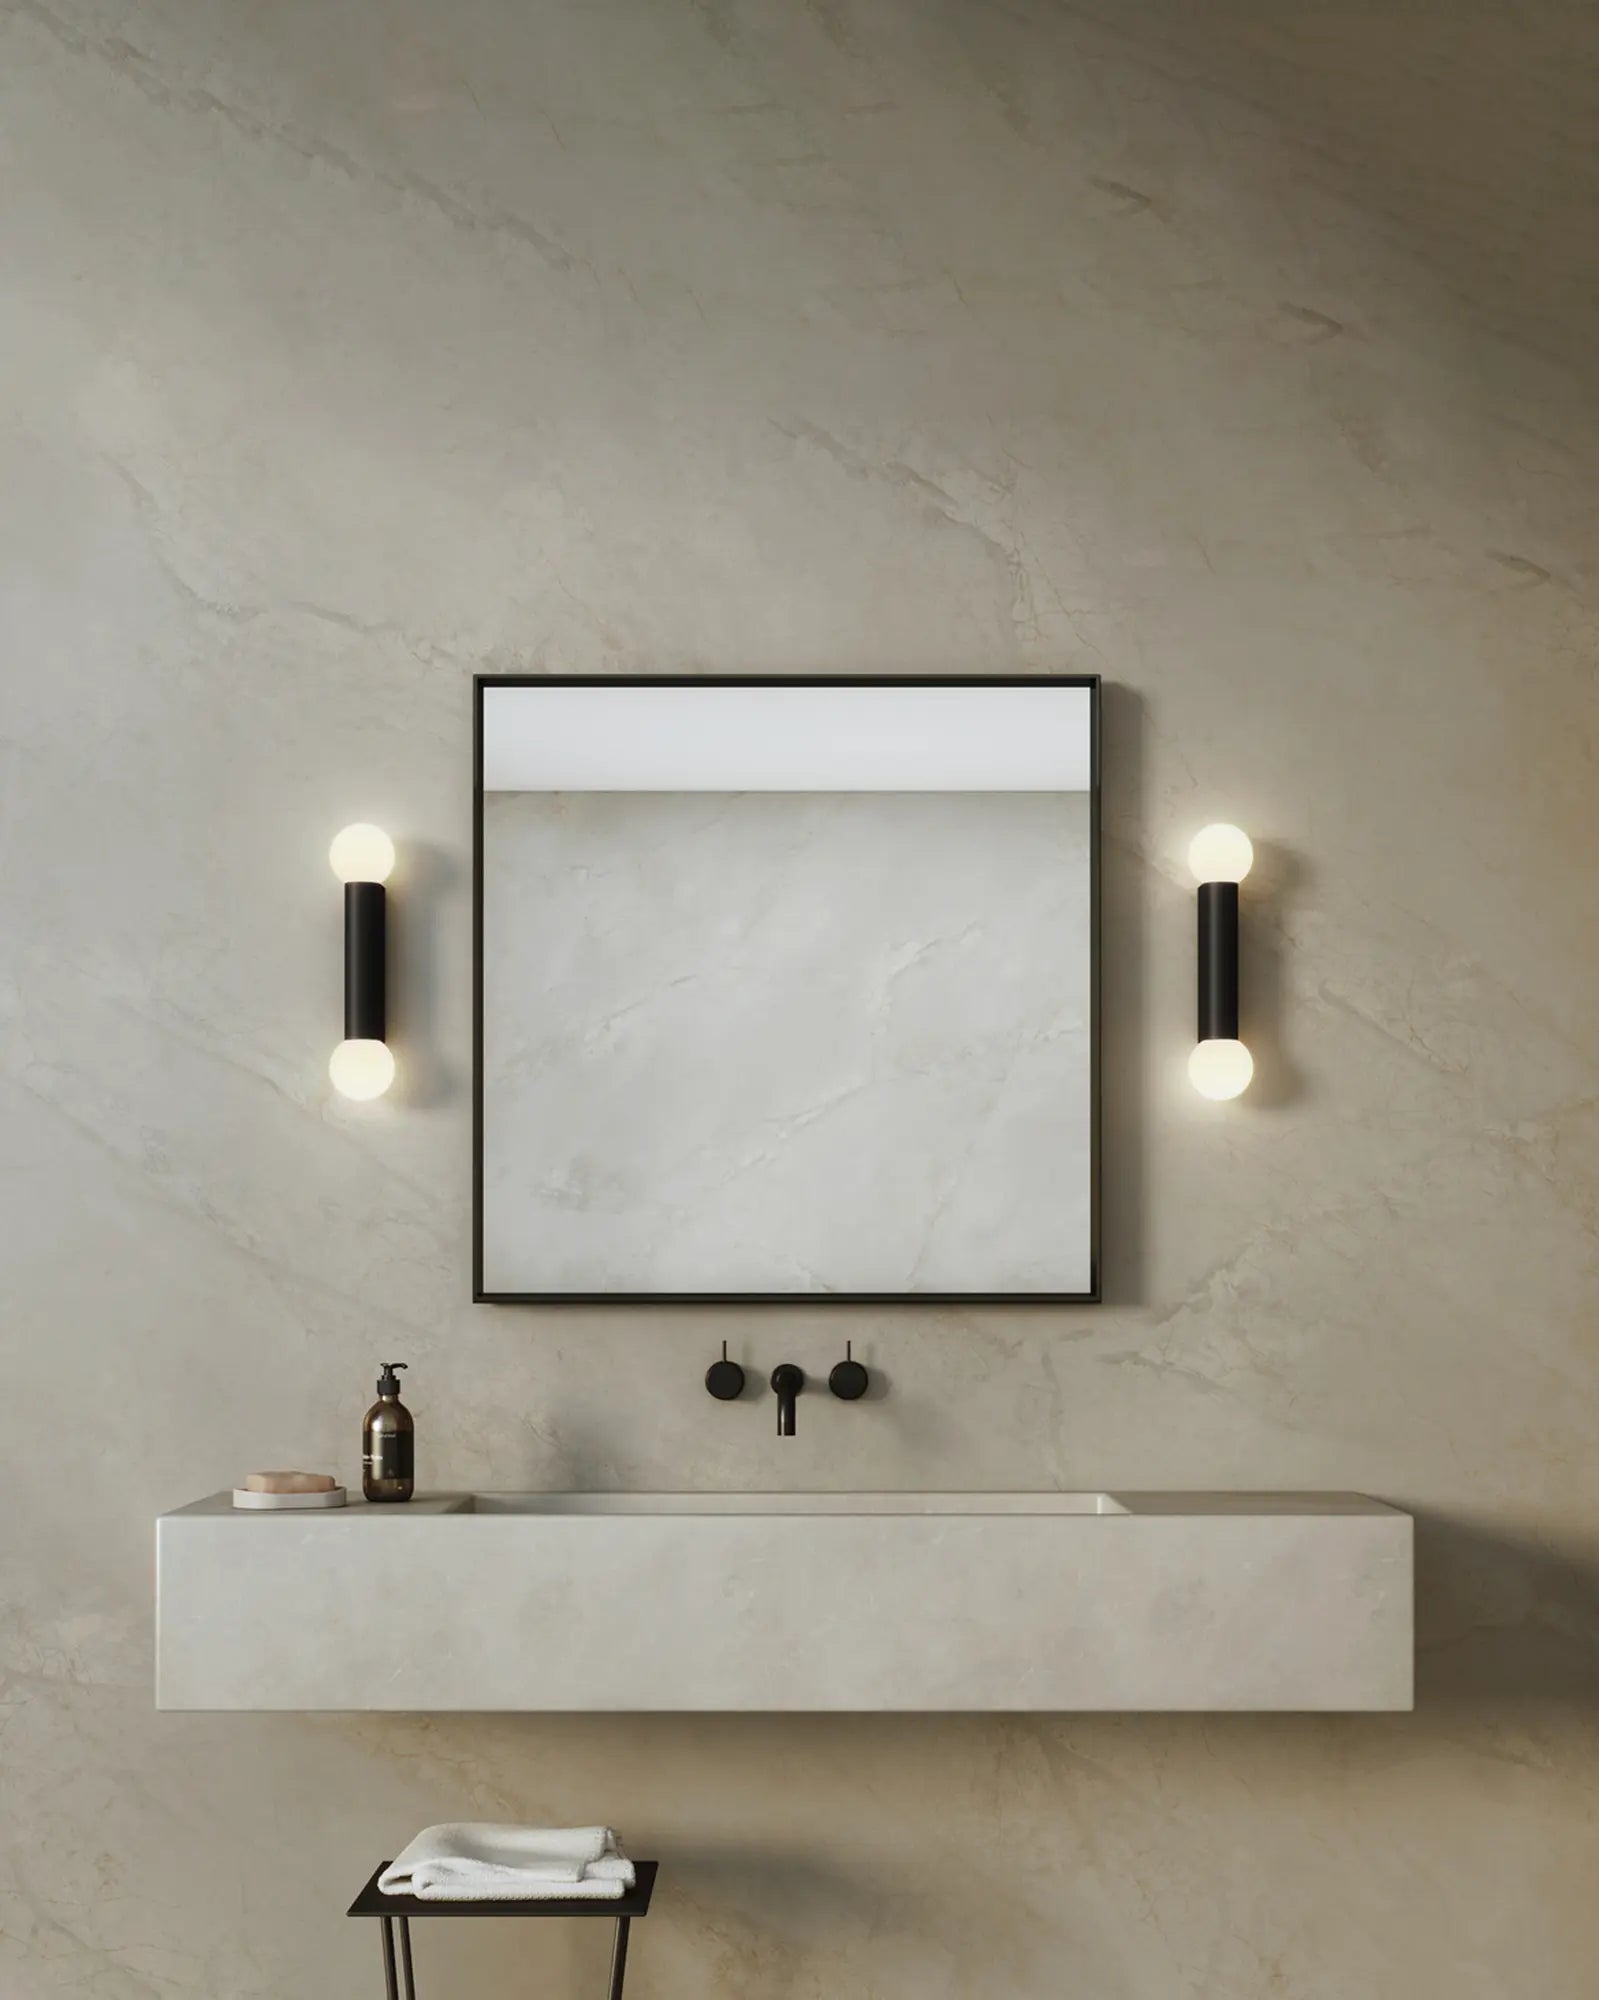 Ortona Twin wall light in a bathroom mirror sides